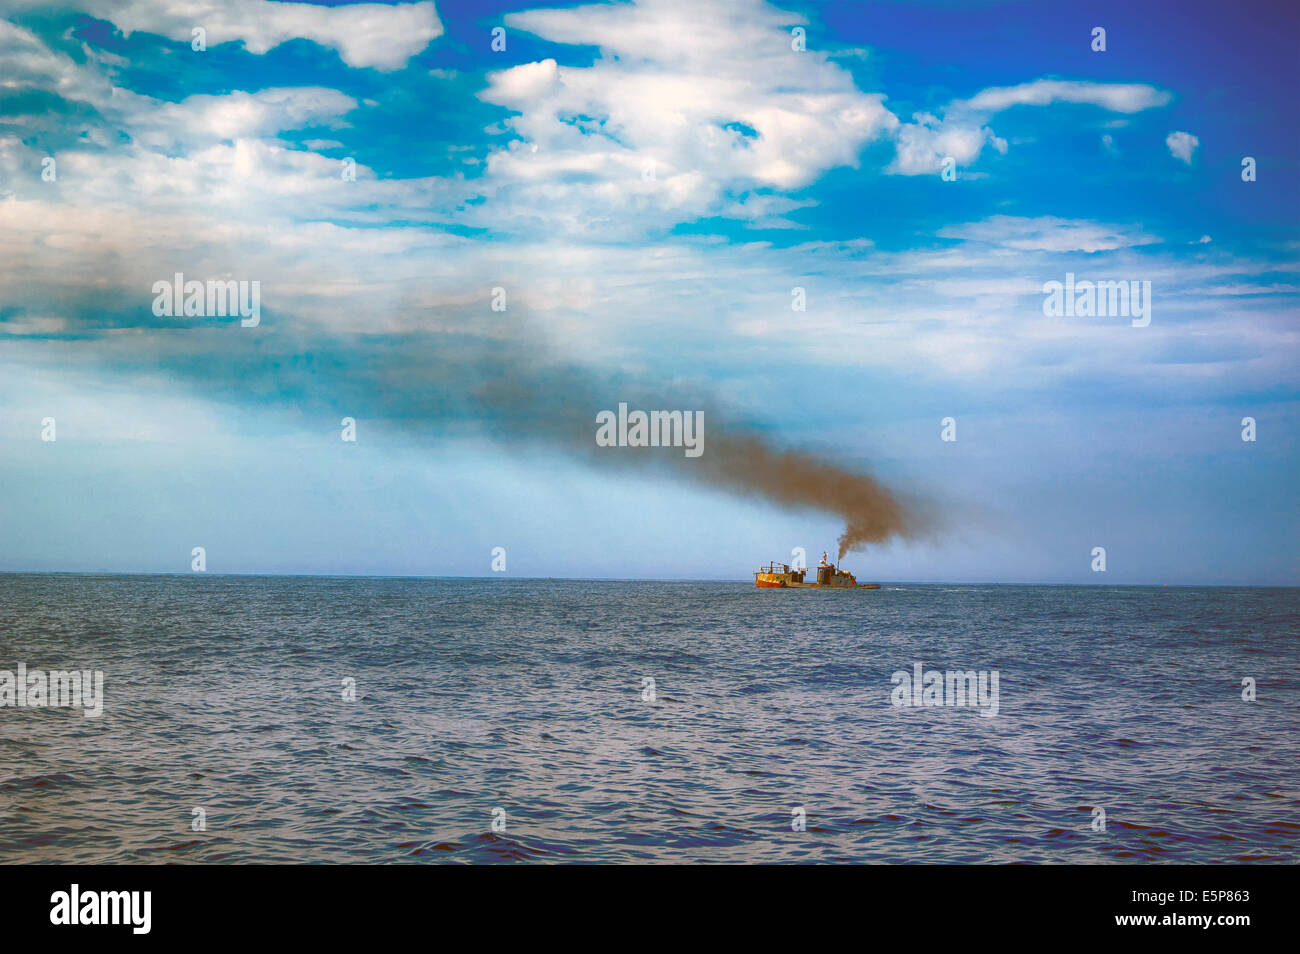 Ship in blue sea with dark smoke Stock Photo